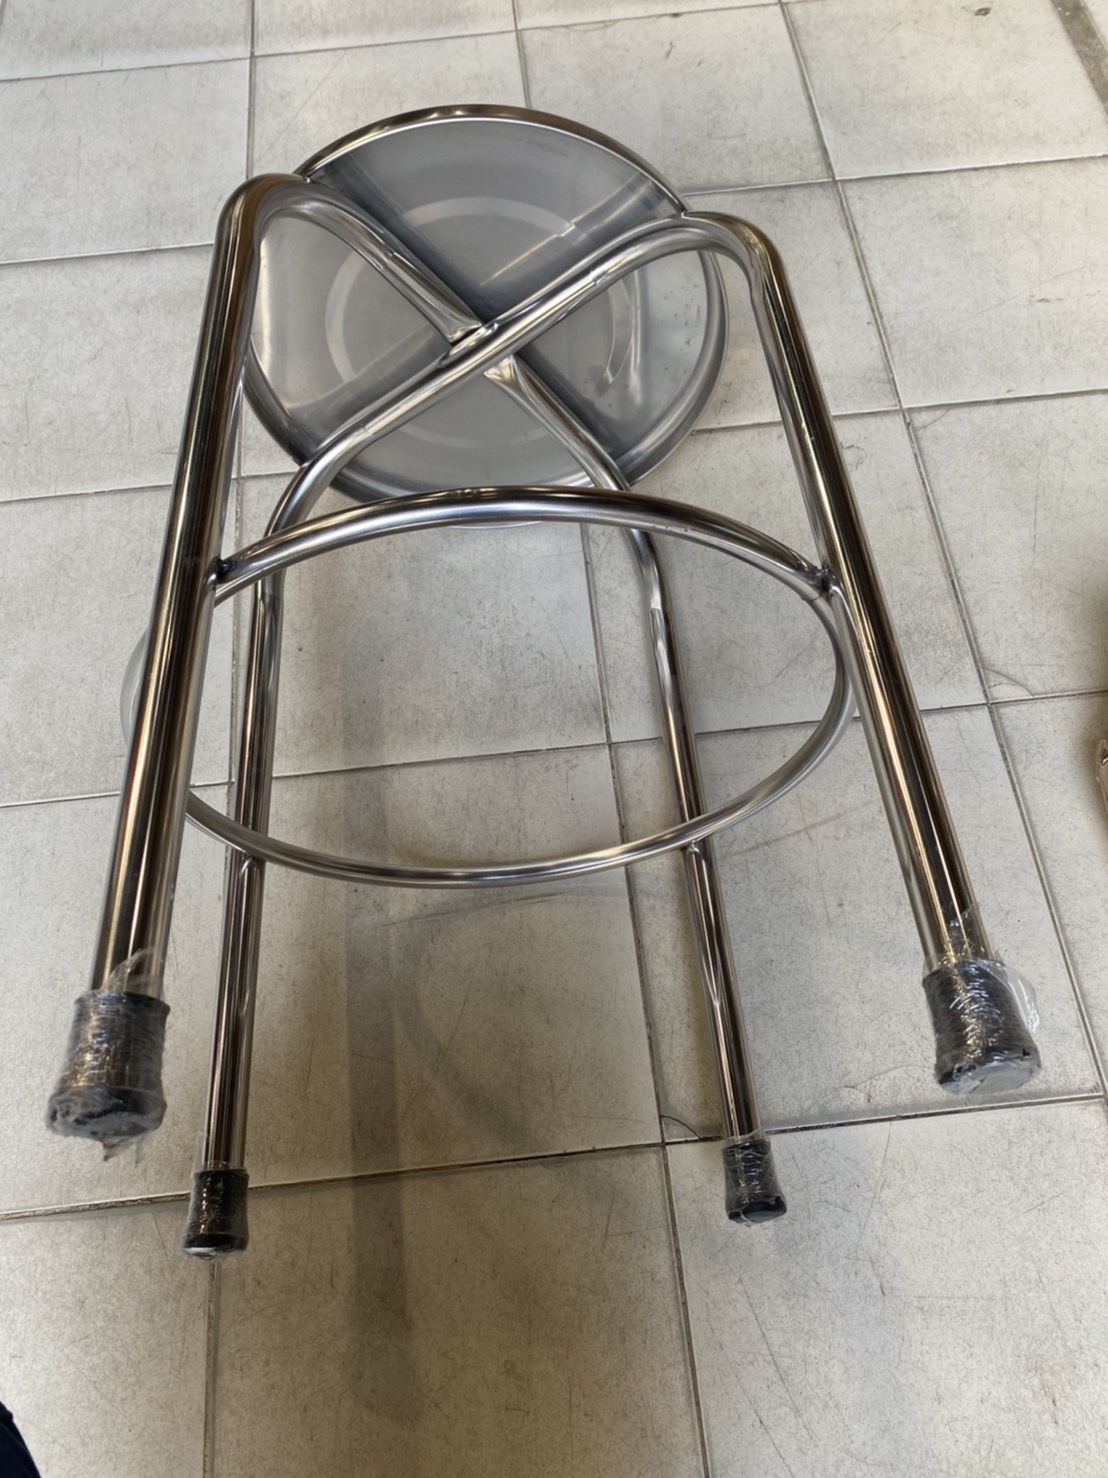 13098::JK-112R::A JK stainless steel chair. Dimension (WxDxH) cm : 44x44x50